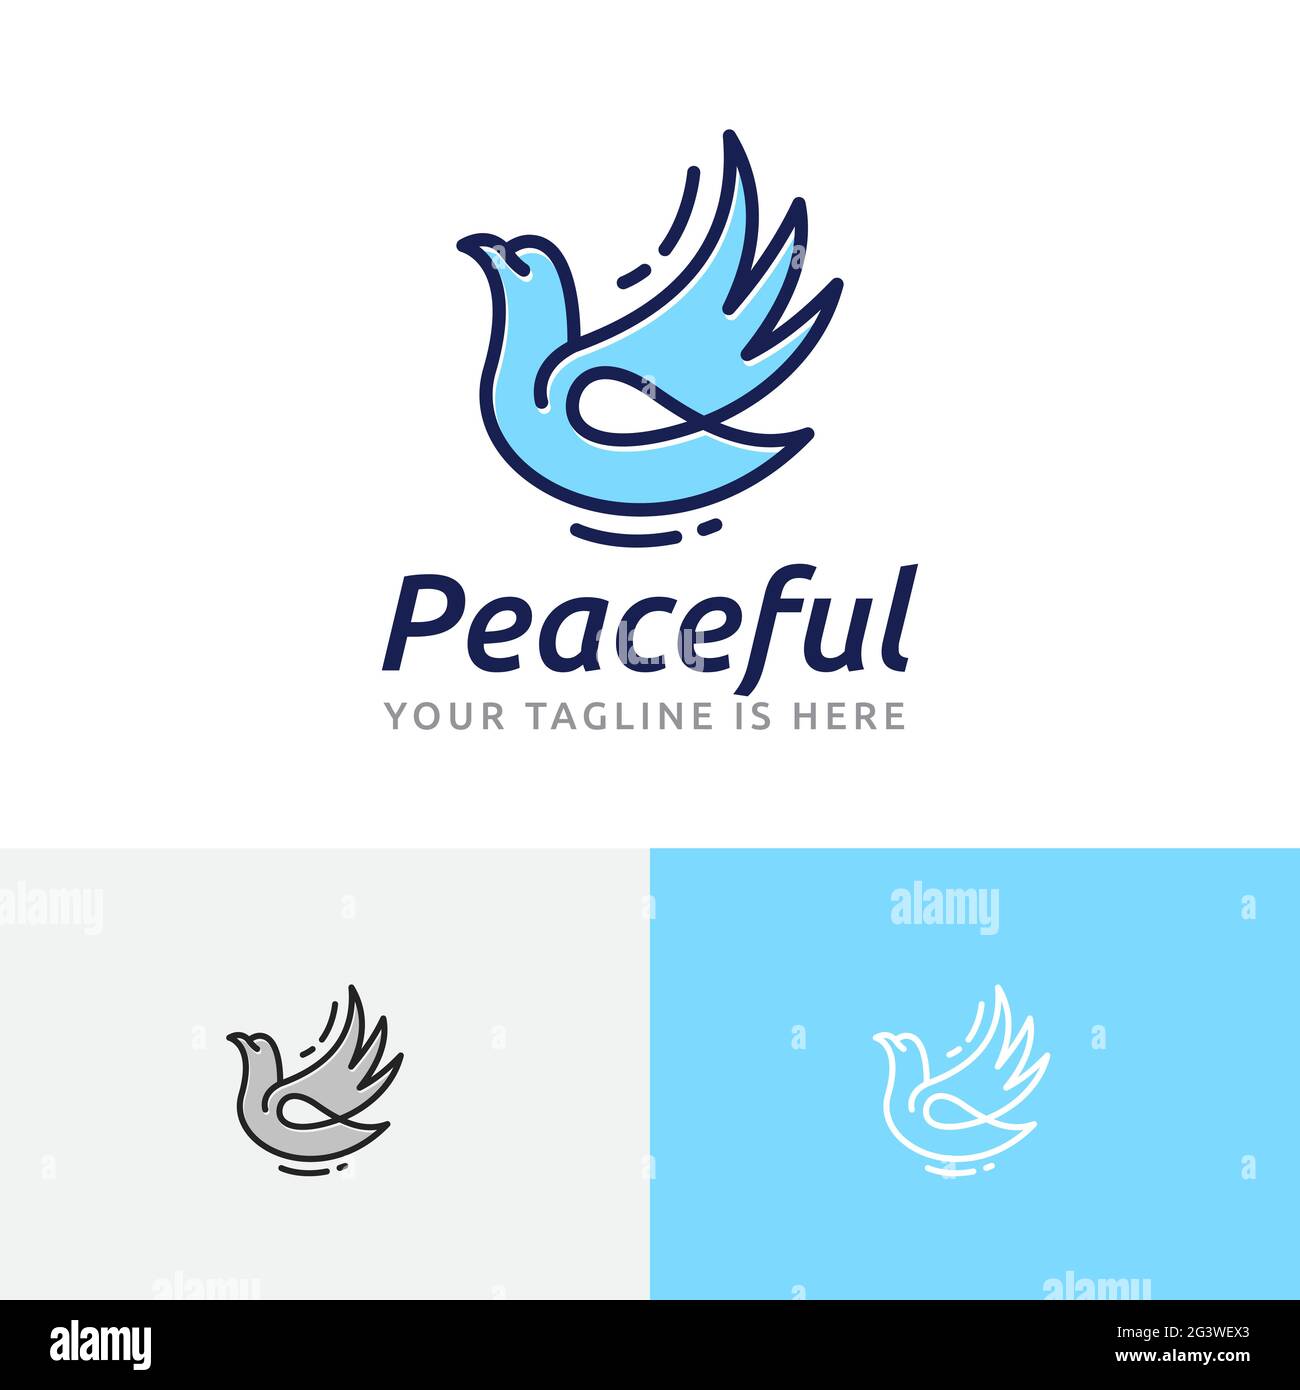 Paisible Dove Pigeon Flying Wing Peace Love Freedom logo Illustration de Vecteur